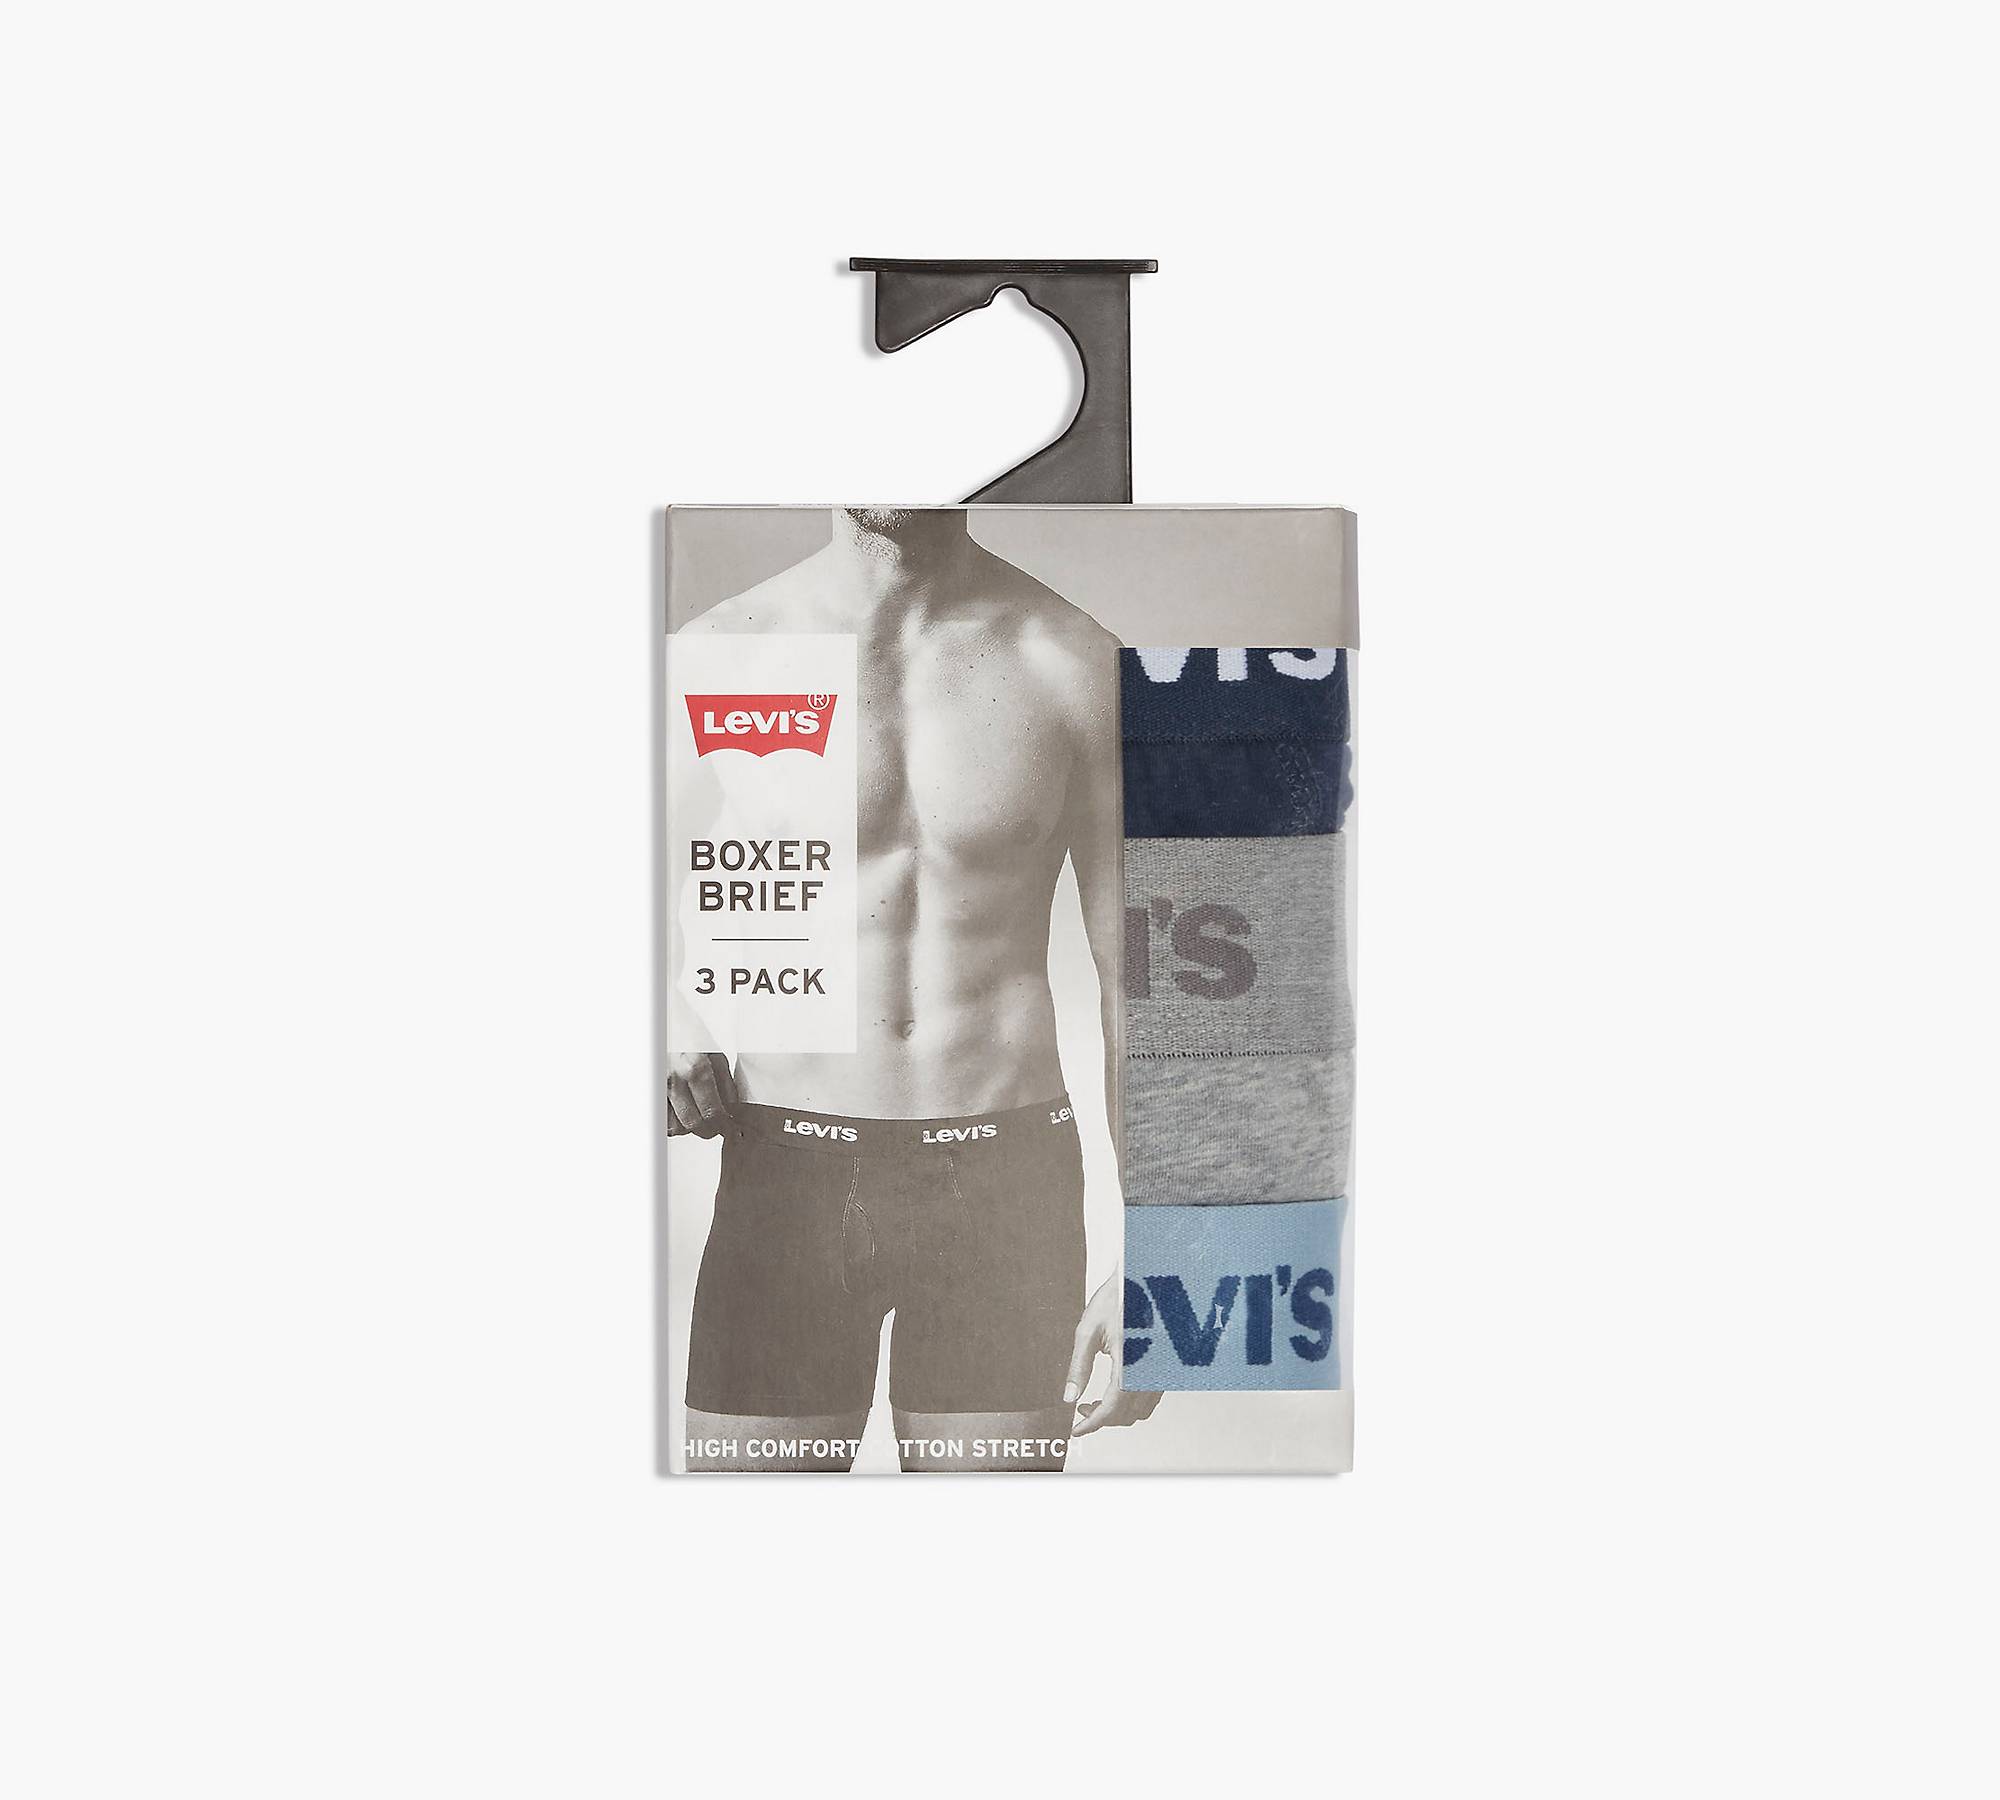 Members Mark Underwear - Stretch Boxer Briefs (5 Pack), Black